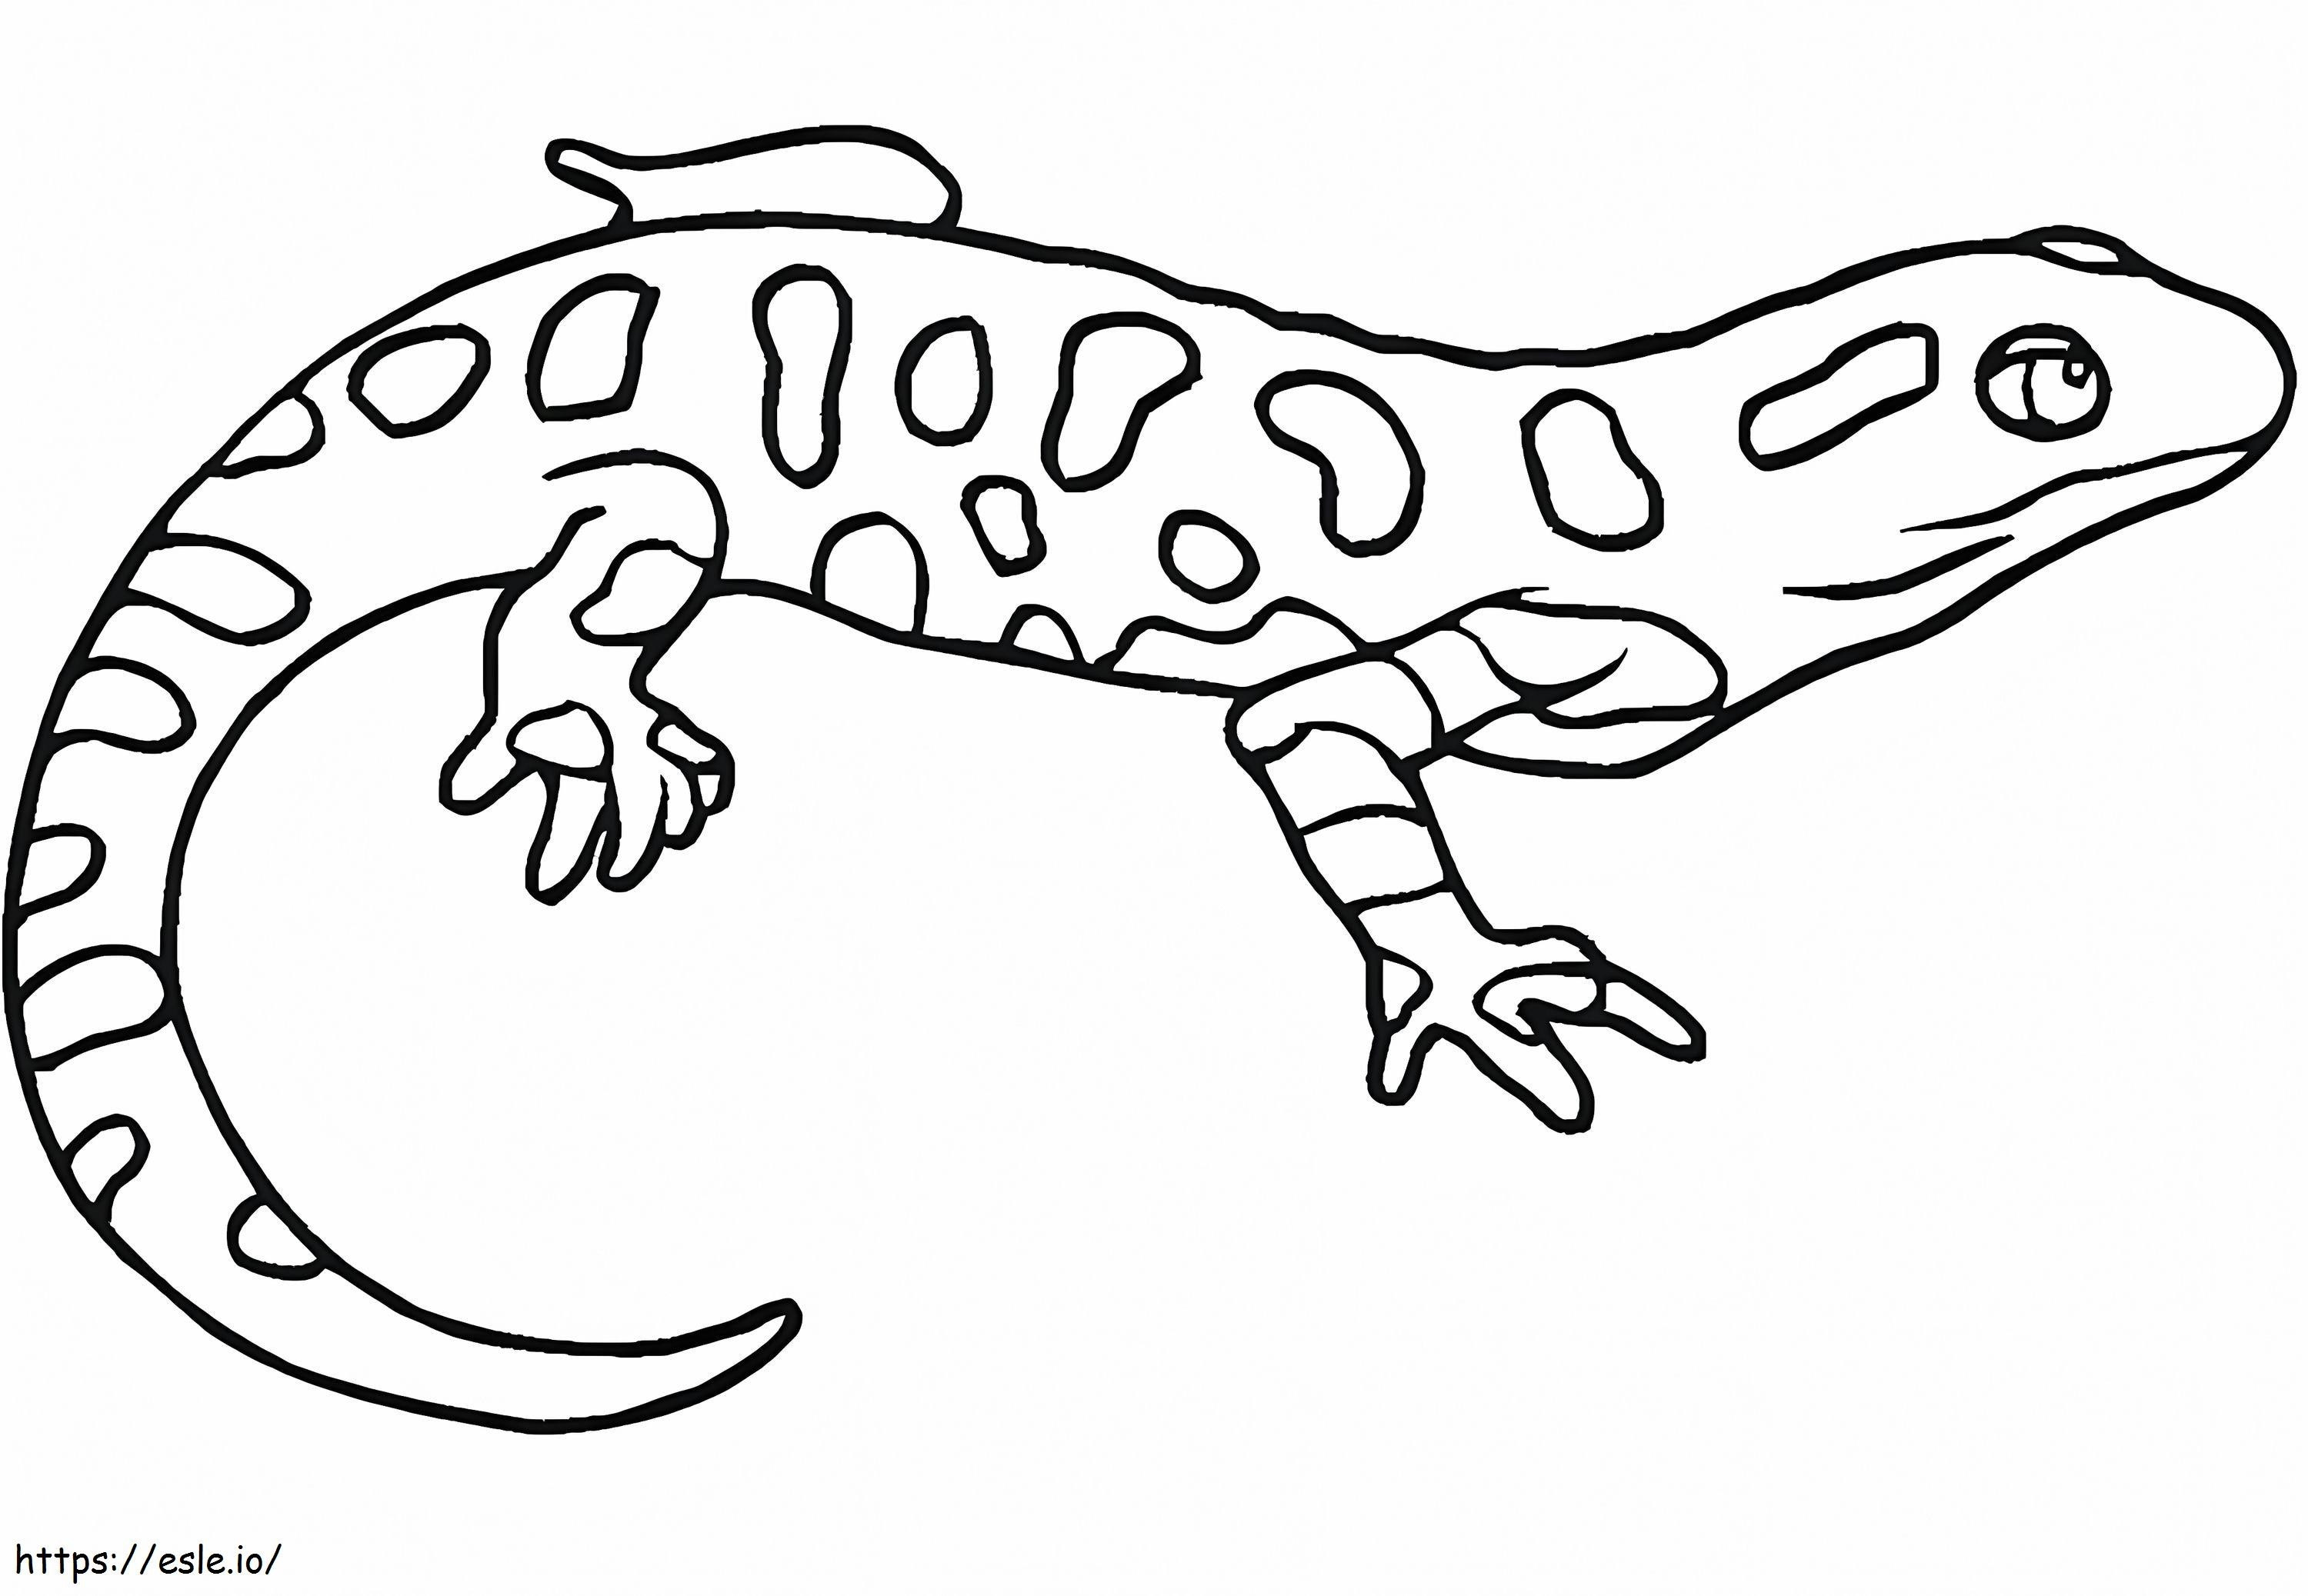 Salamandra 8 da colorare